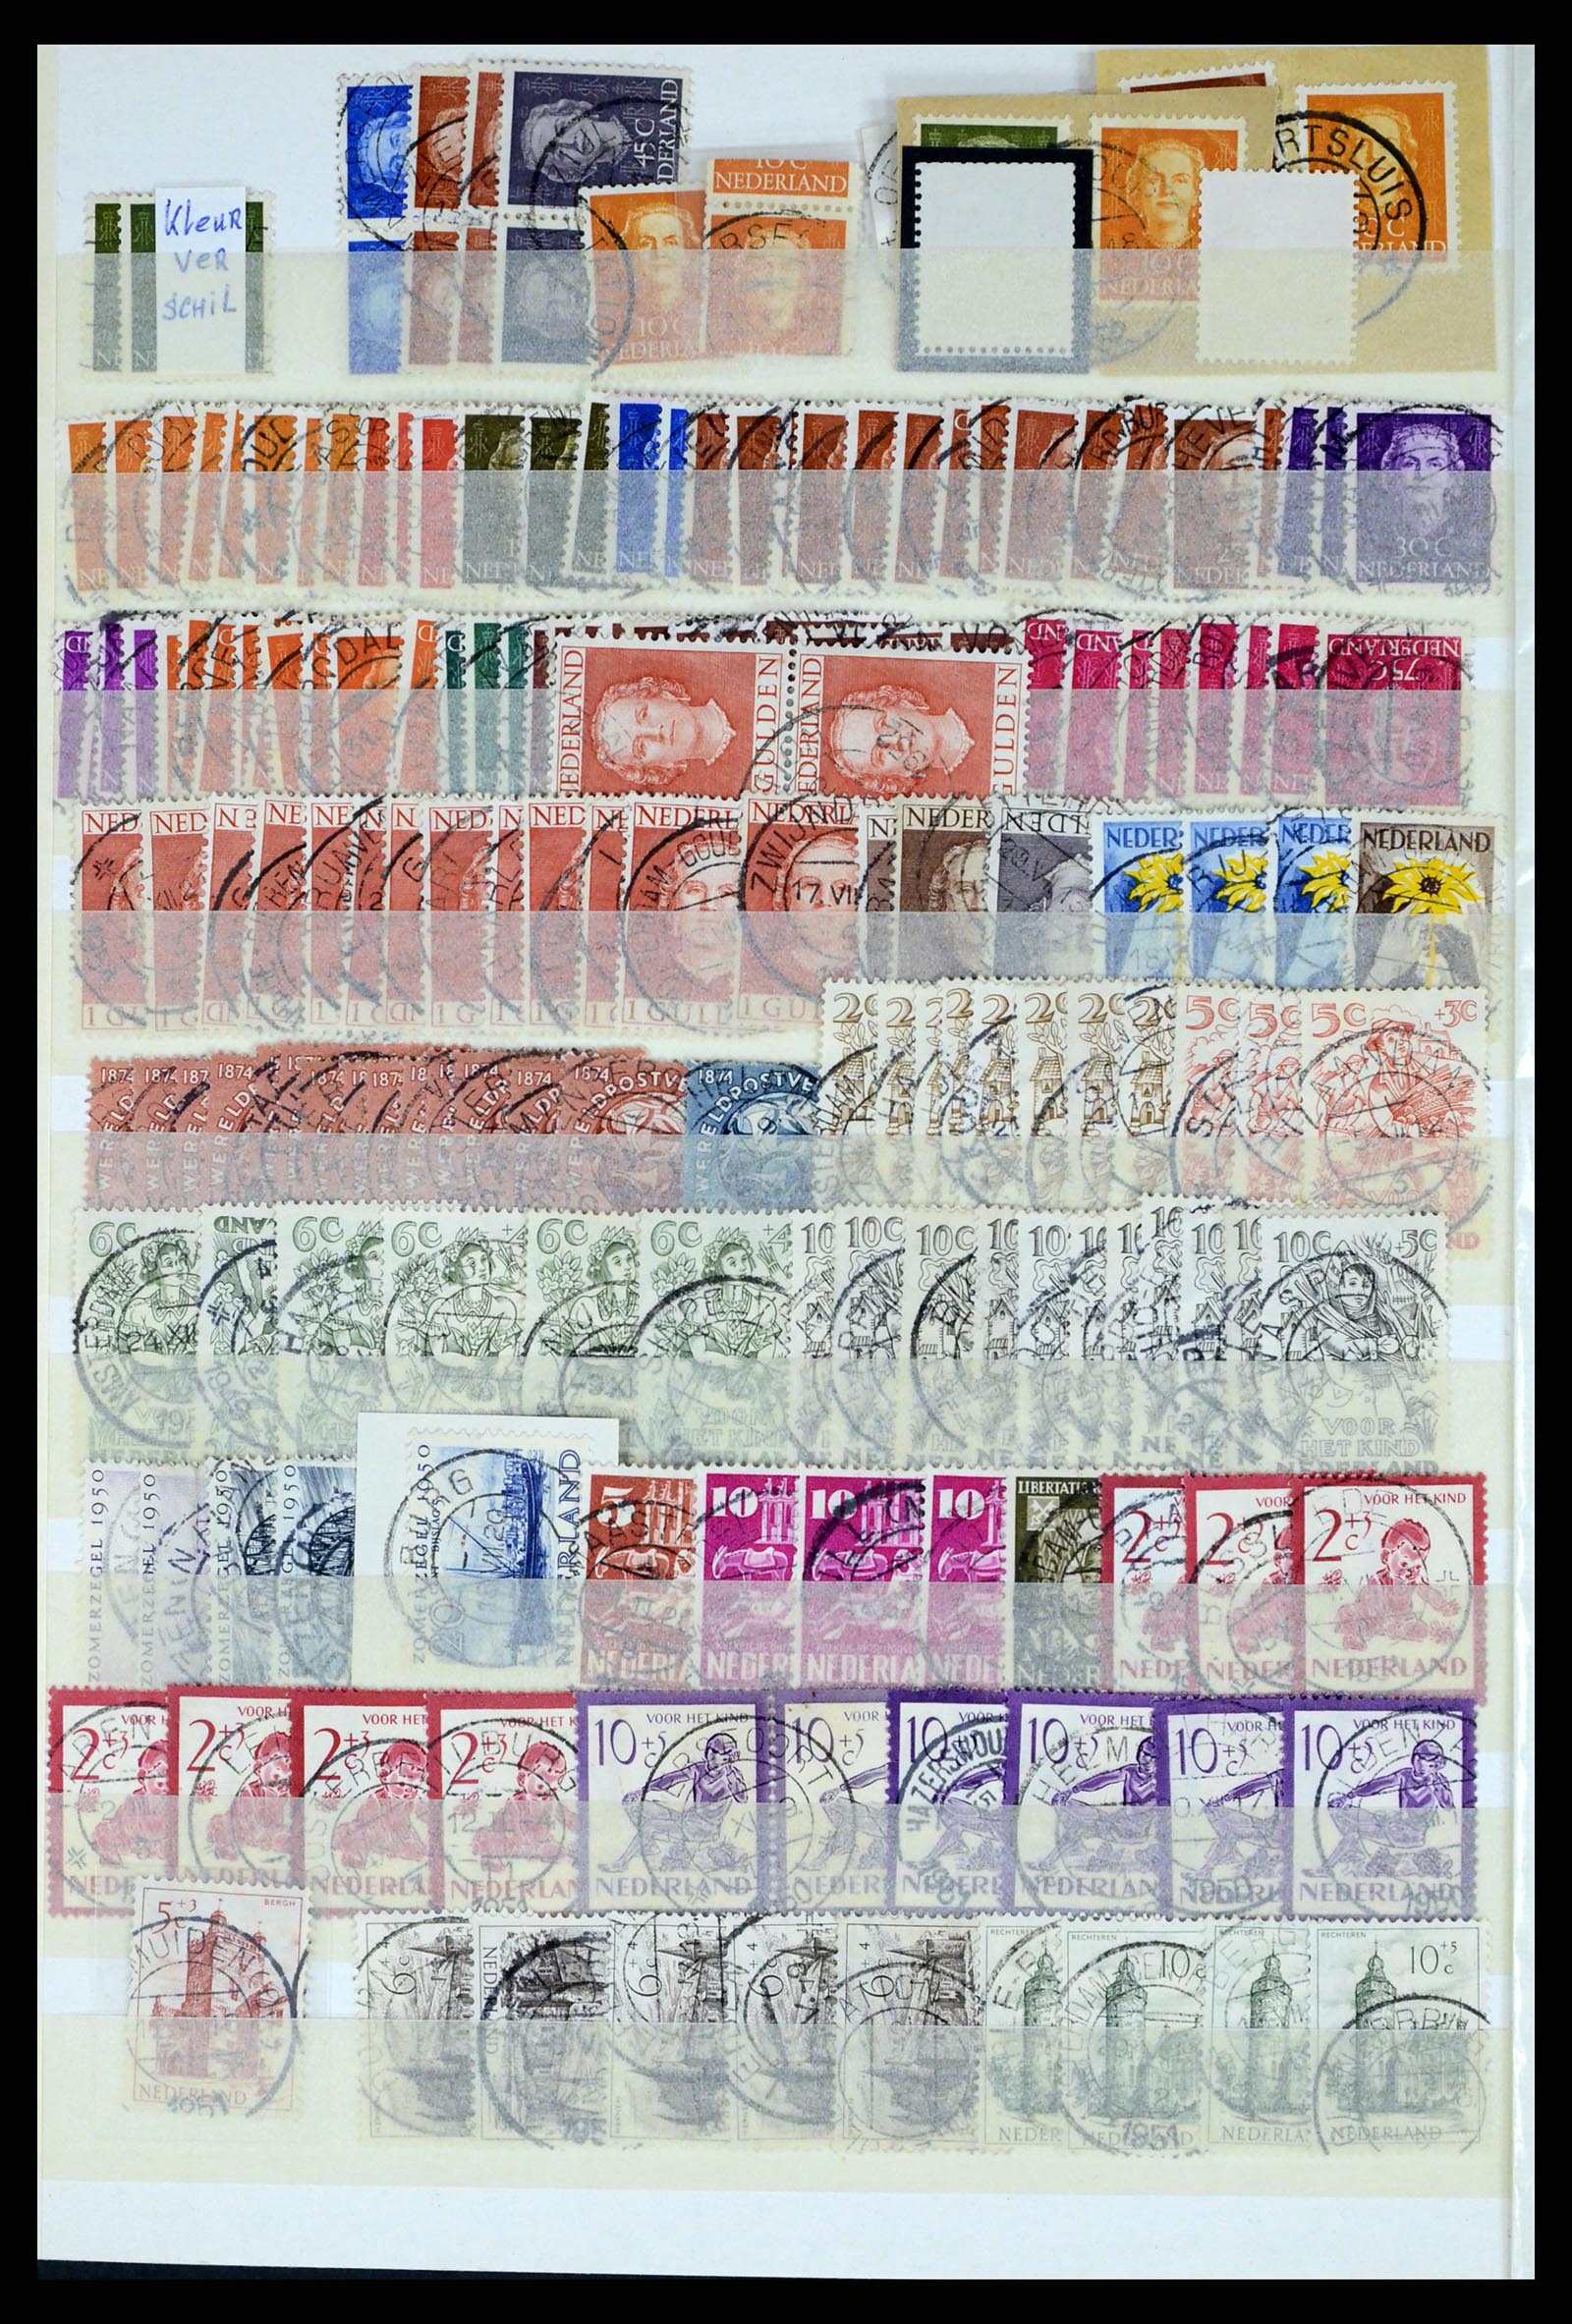 37424 046 - Stamp collection 37424 Netherlands shortbar cancels.